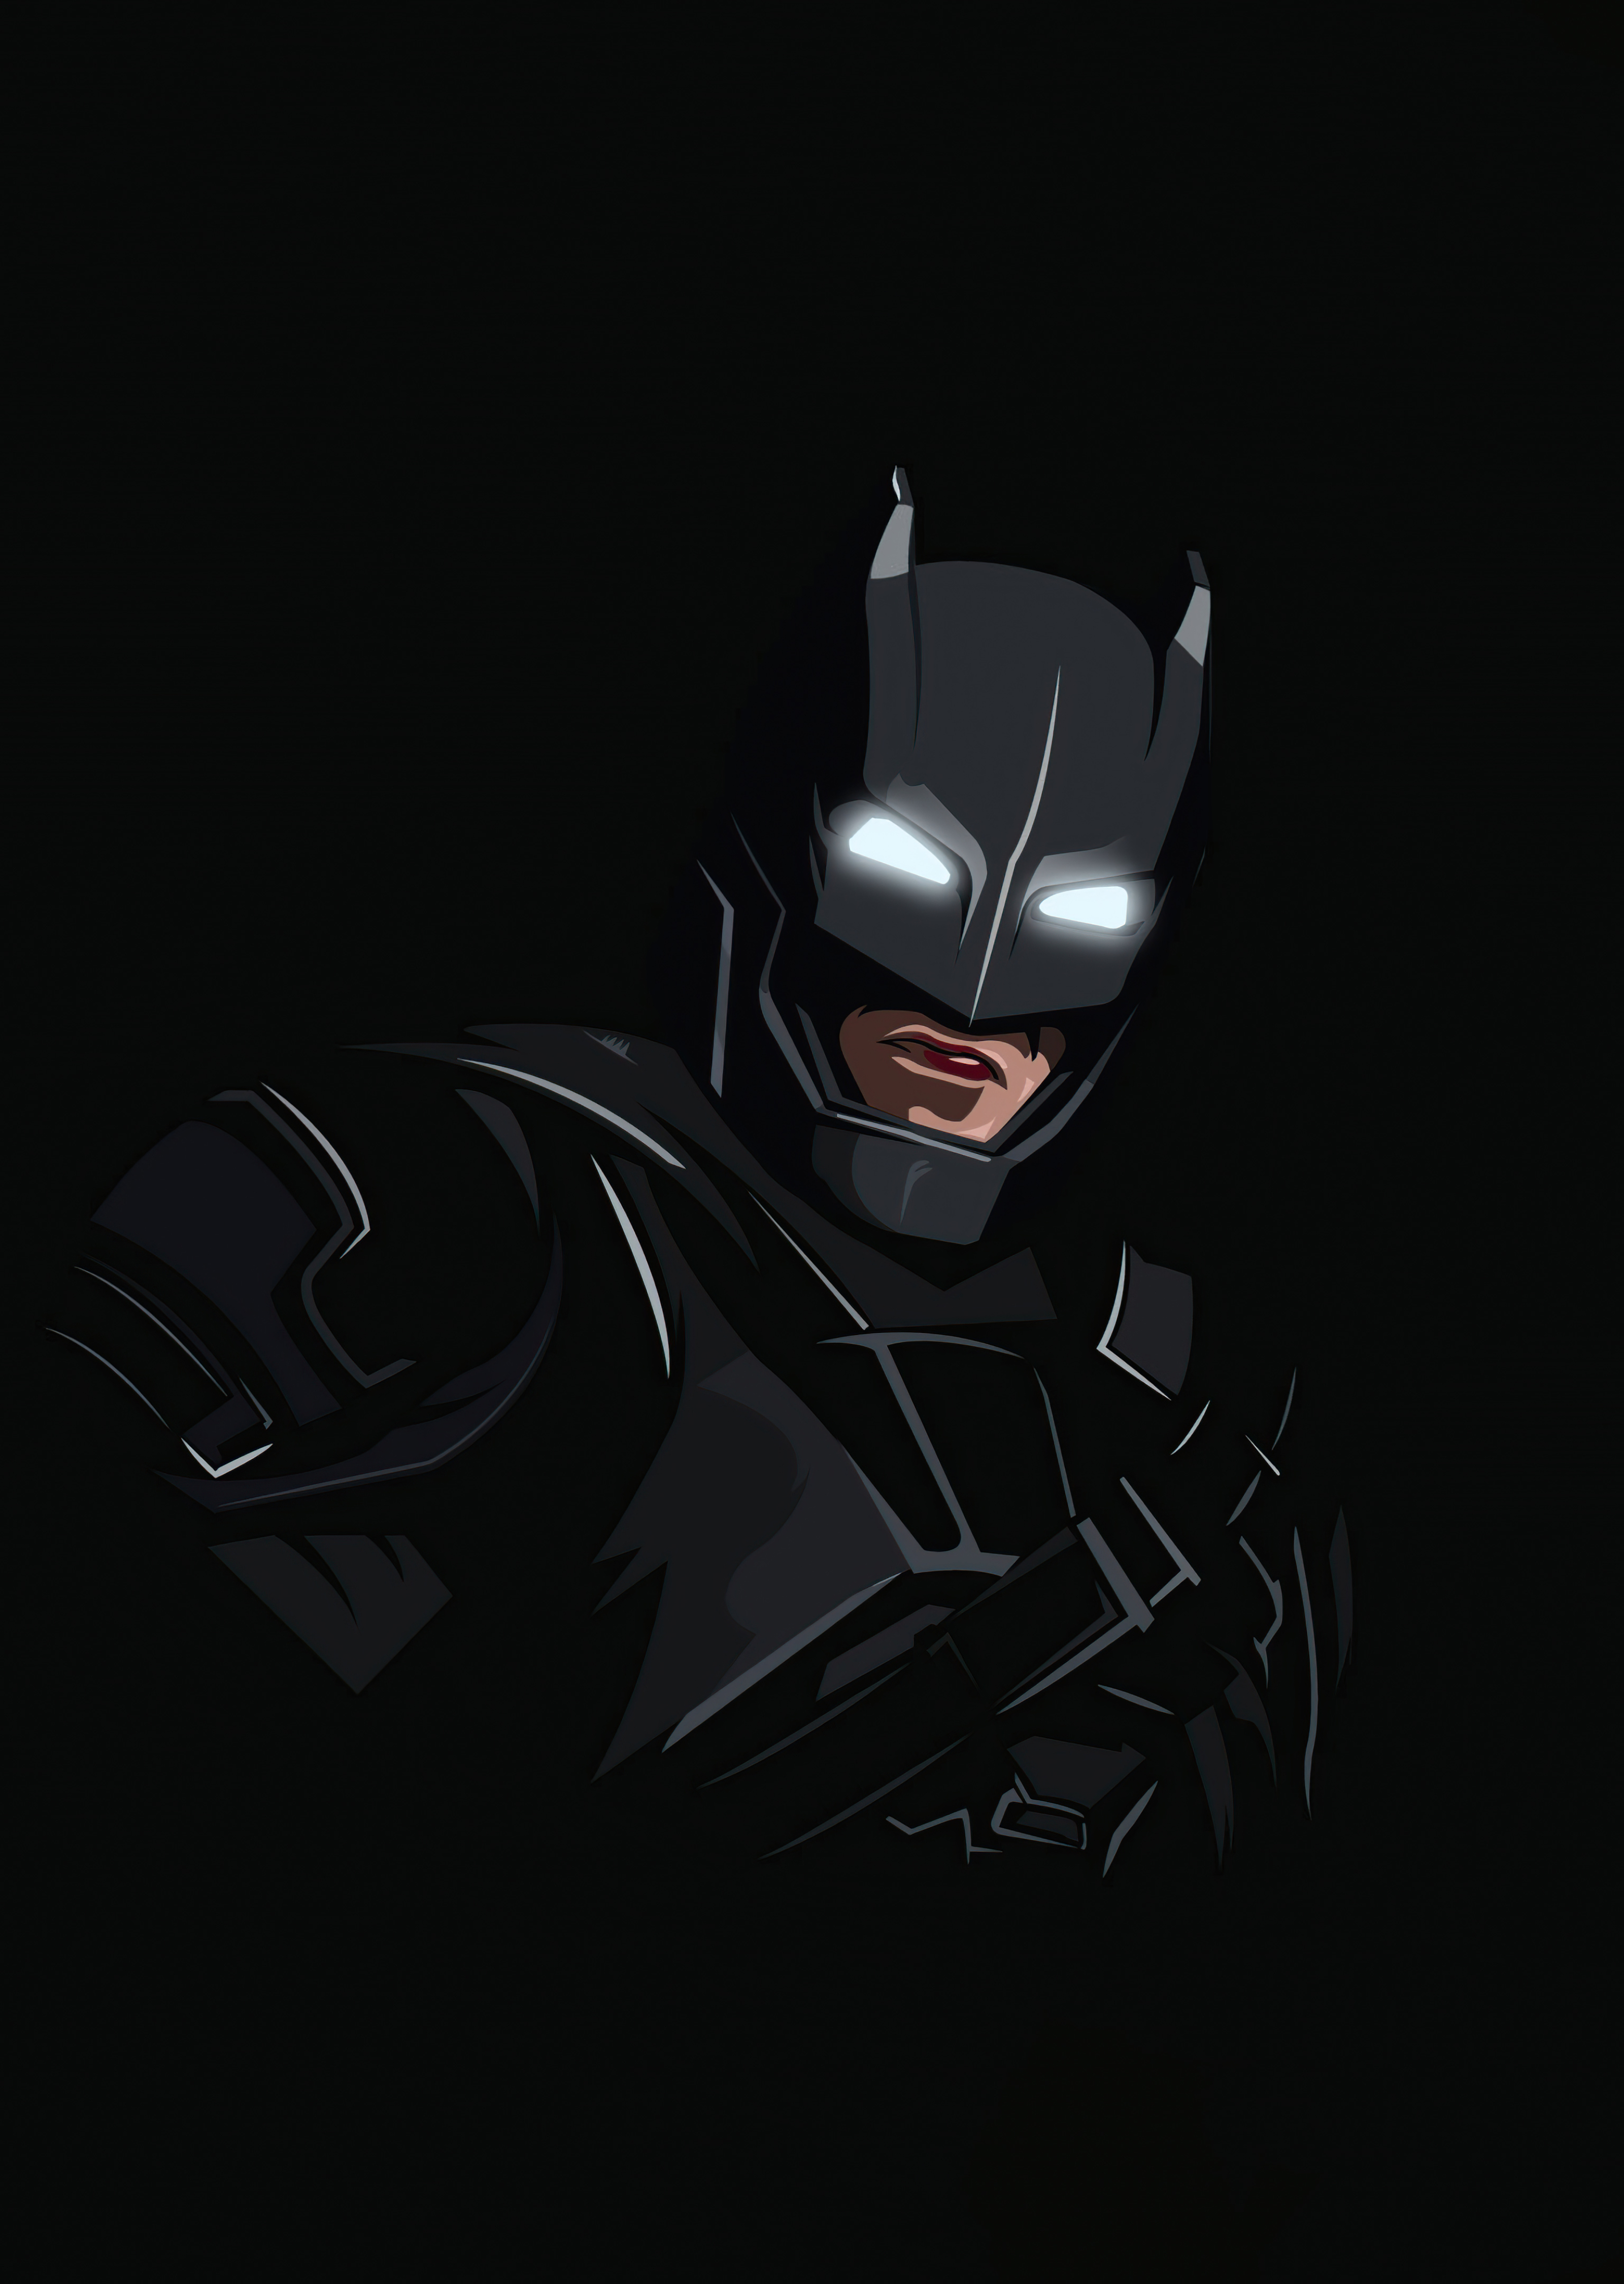 Batman amoled Wallpapers Download | MobCup